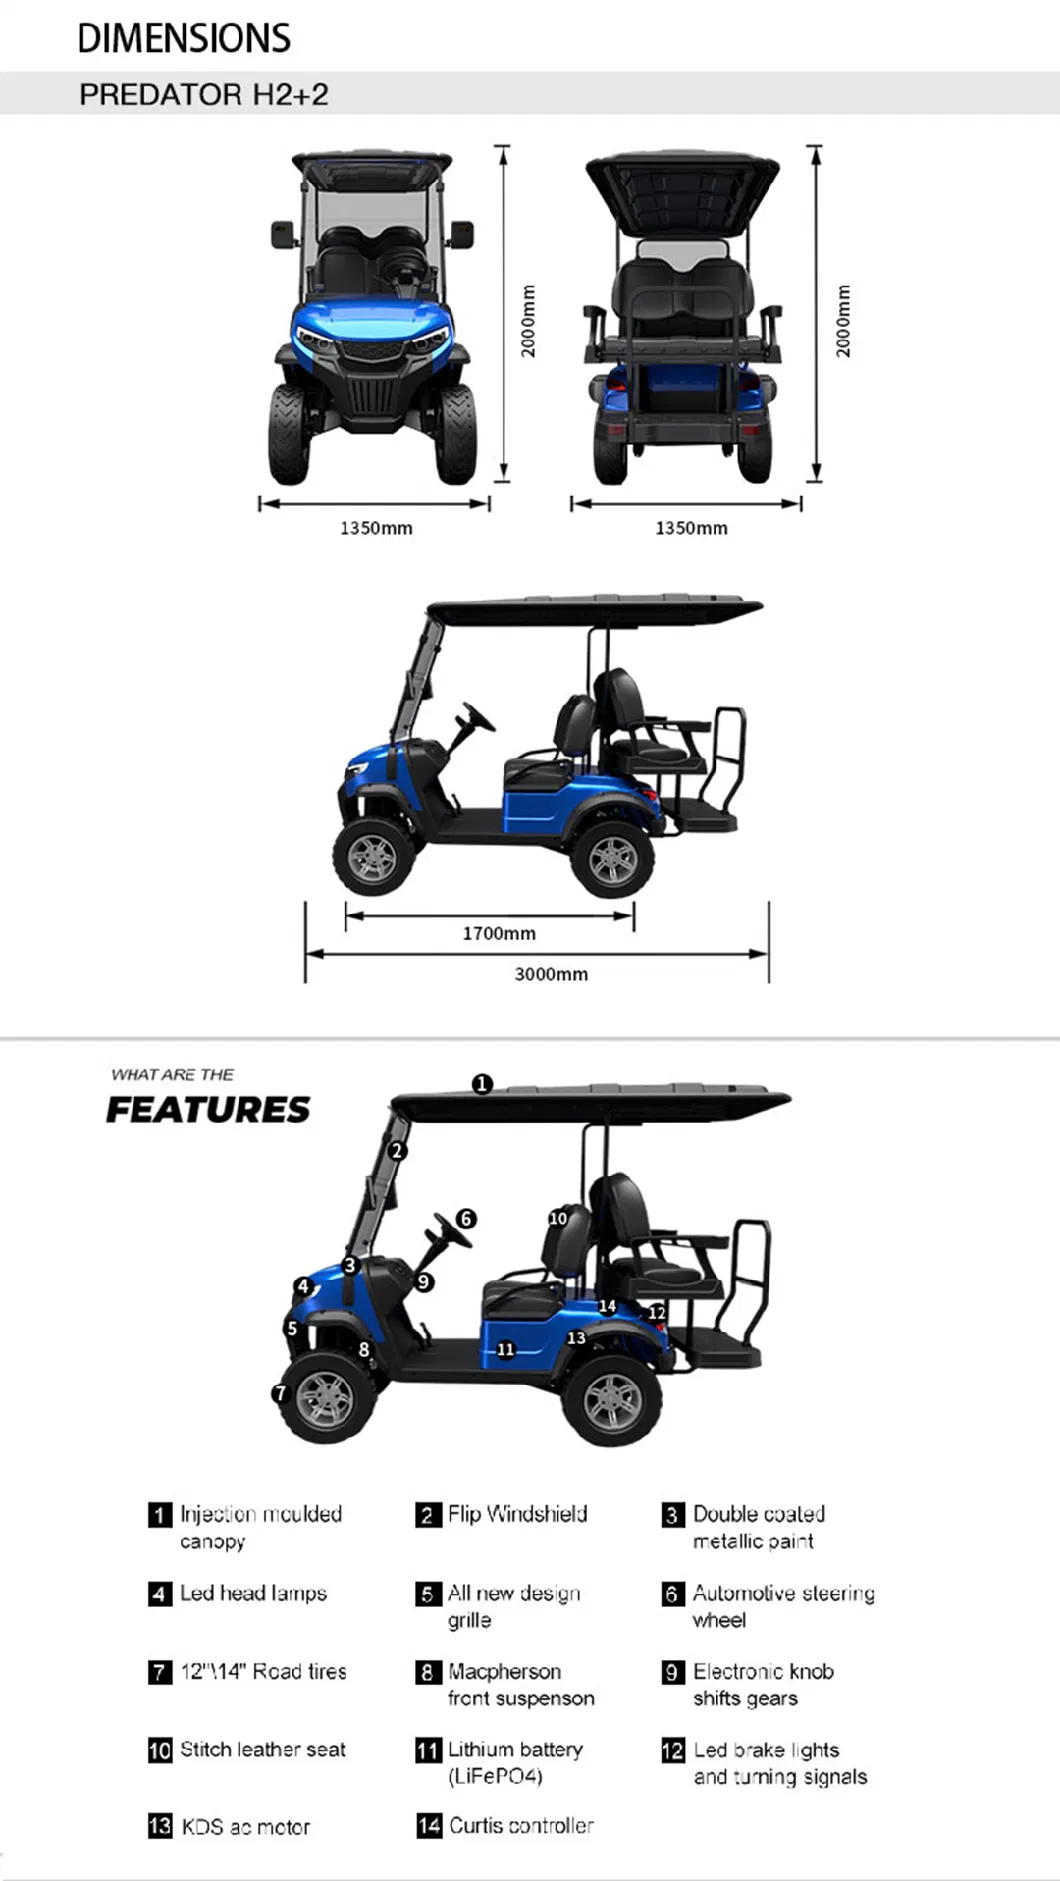 Hunting Manufacturer Customized 2+2 Seater Predator H2+2 Golf Car Golf Cart